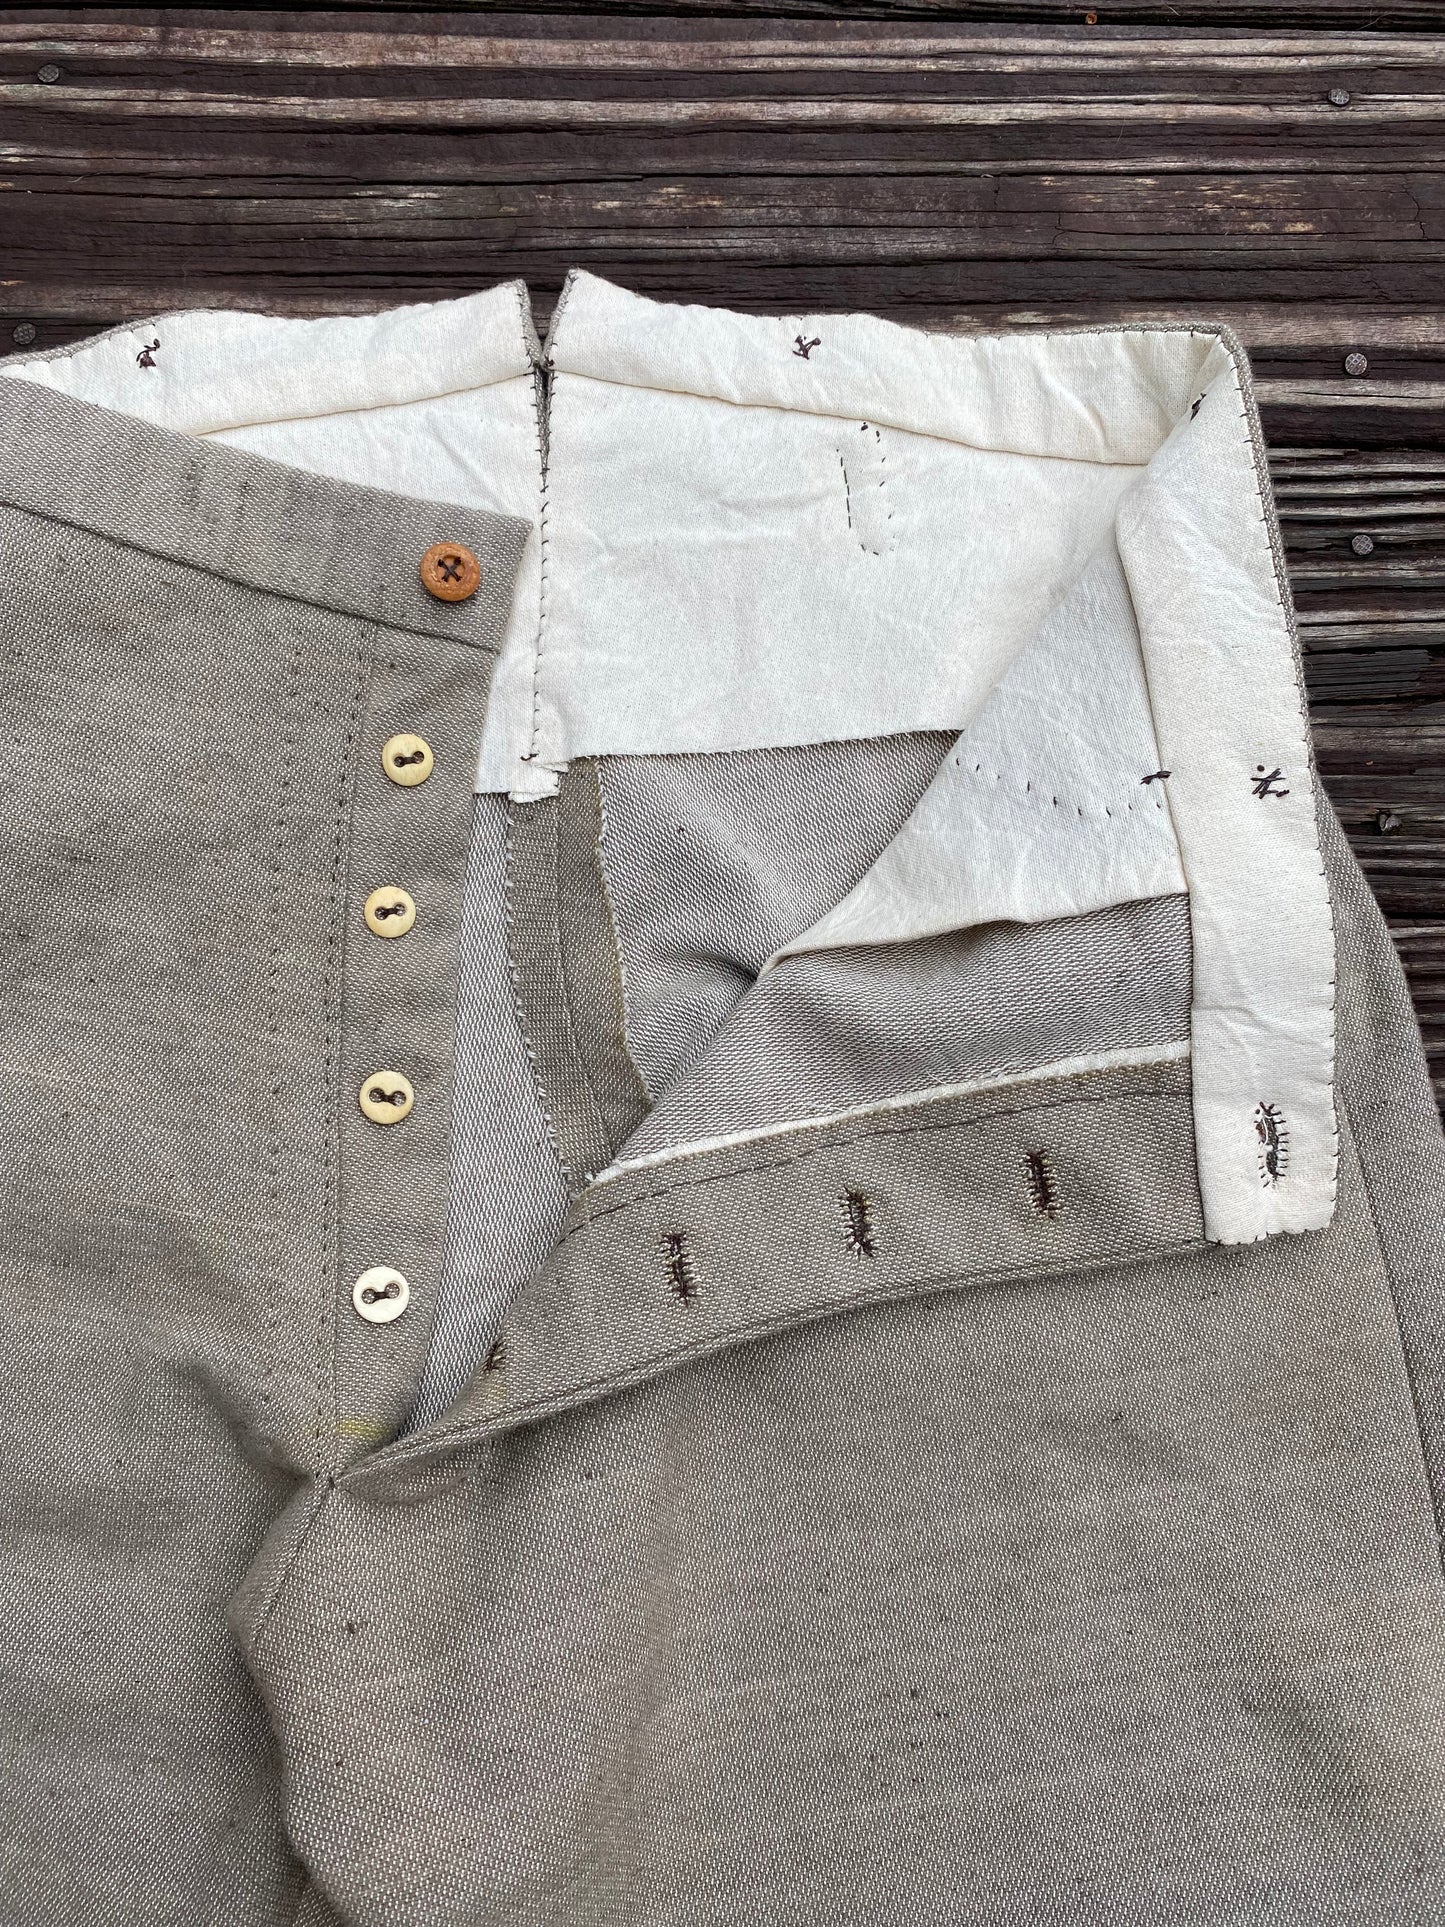 Richmond Clothing Bureau Trousers (Jean) 1862-1865